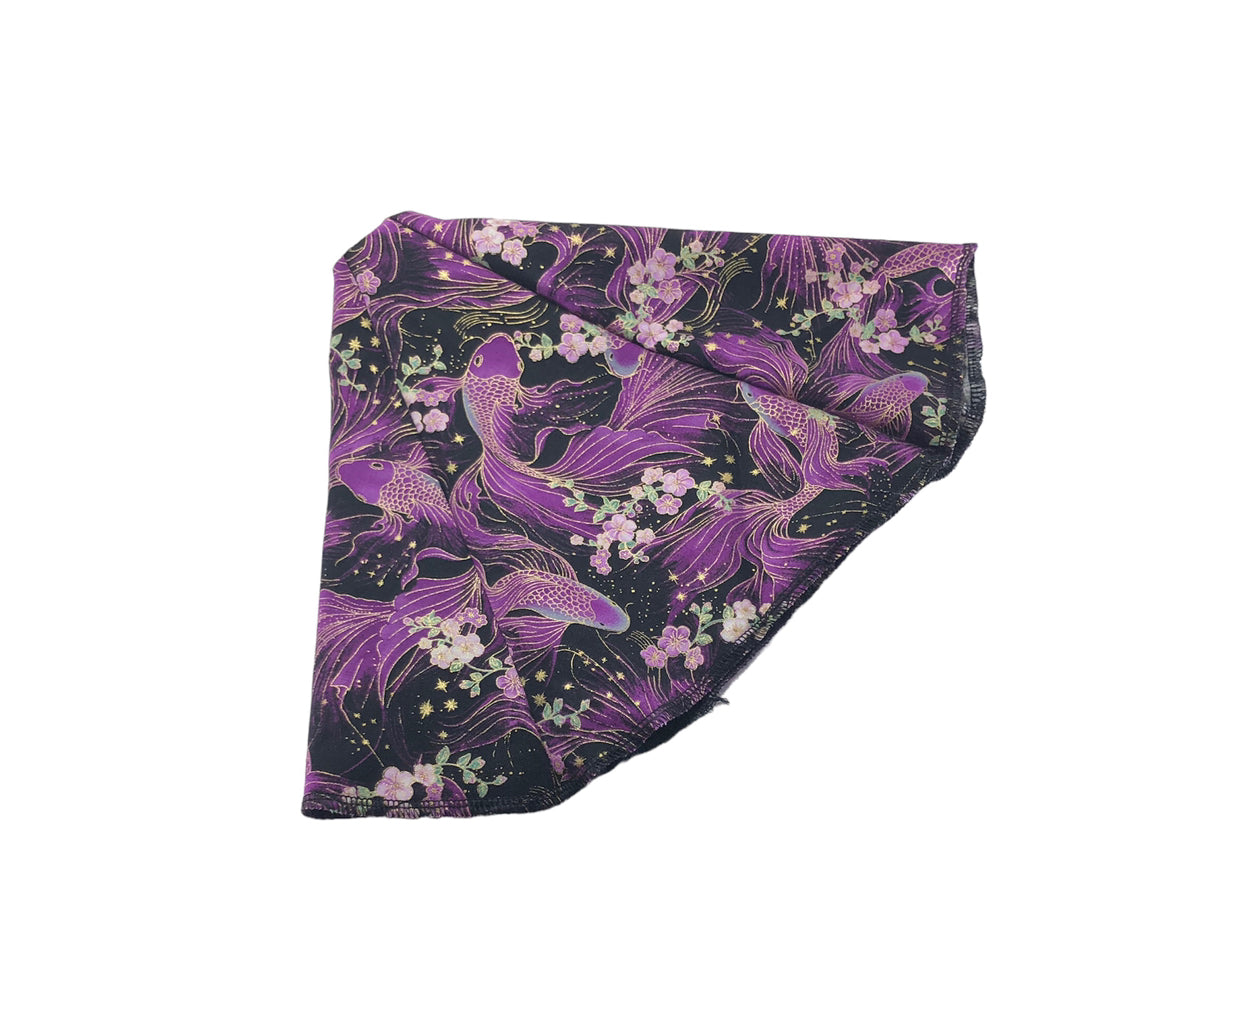 Mr__Grip purple Floral Shift Boot Custom JDM